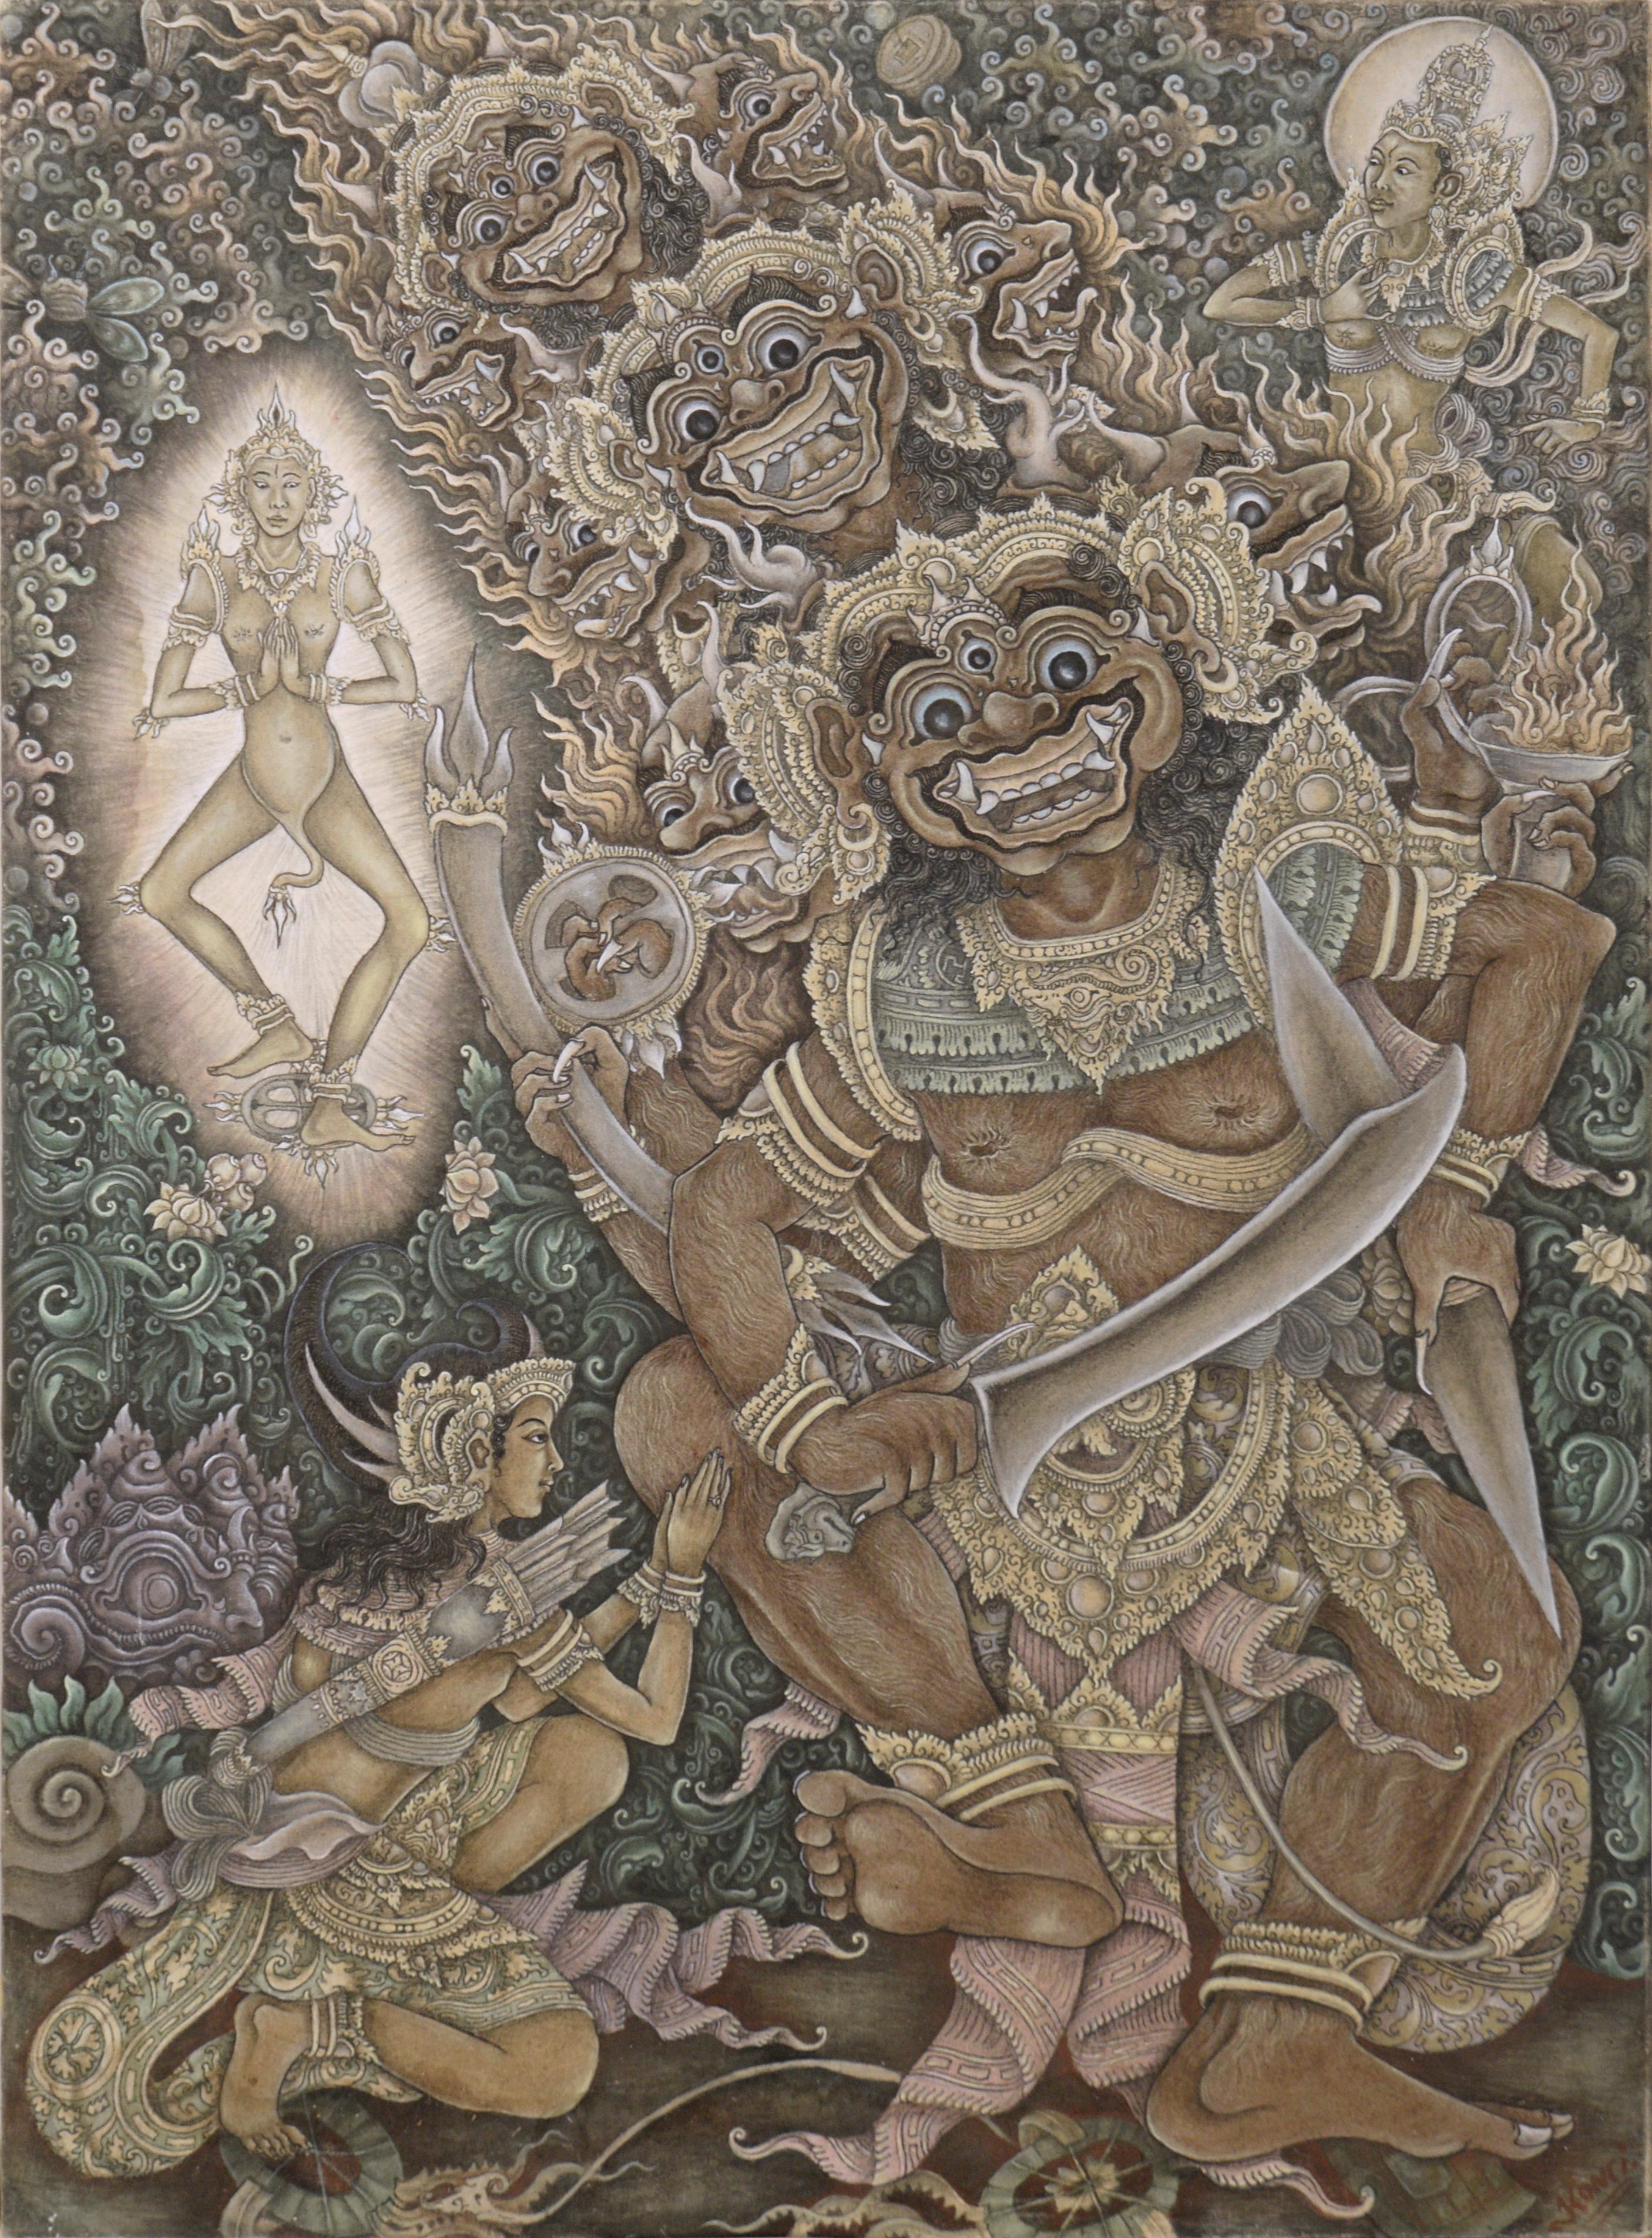 Konci Figurative Painting - The Goddess Kali Appears to a Hunter - Balinese Ubud Painting Mask Dance